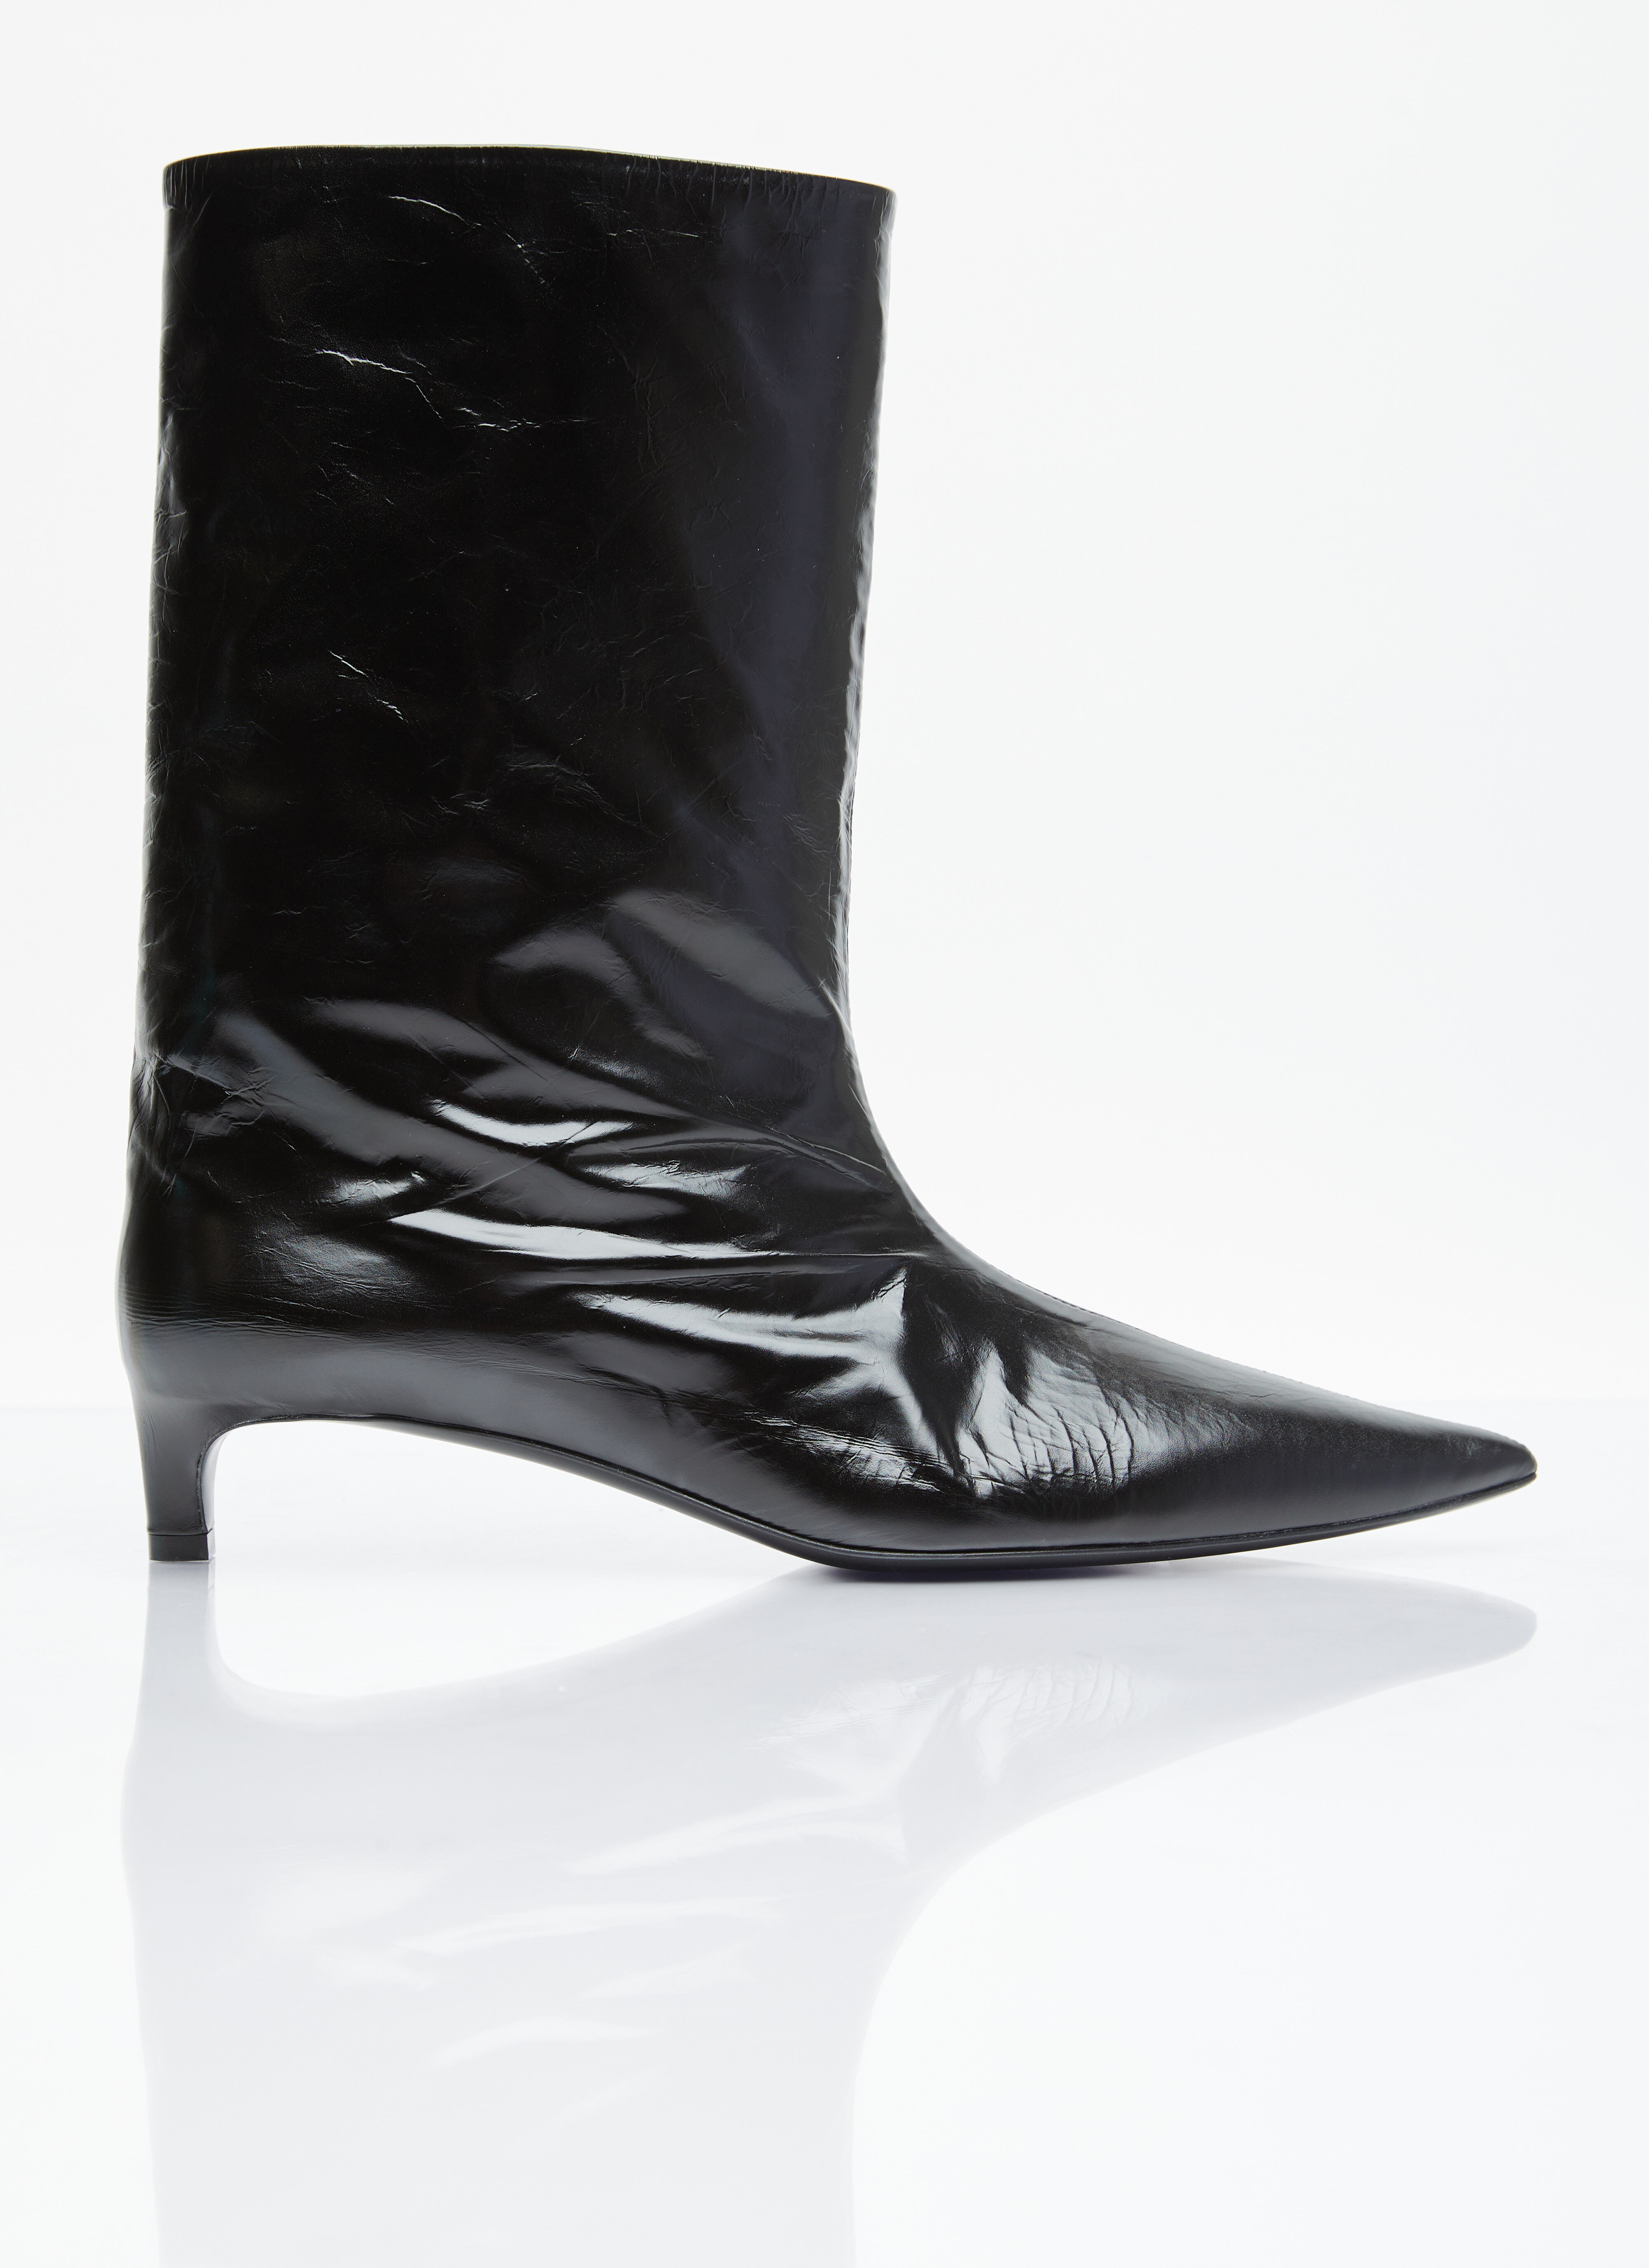 Jil Sander Leather Ankle Boots Black jil0156004